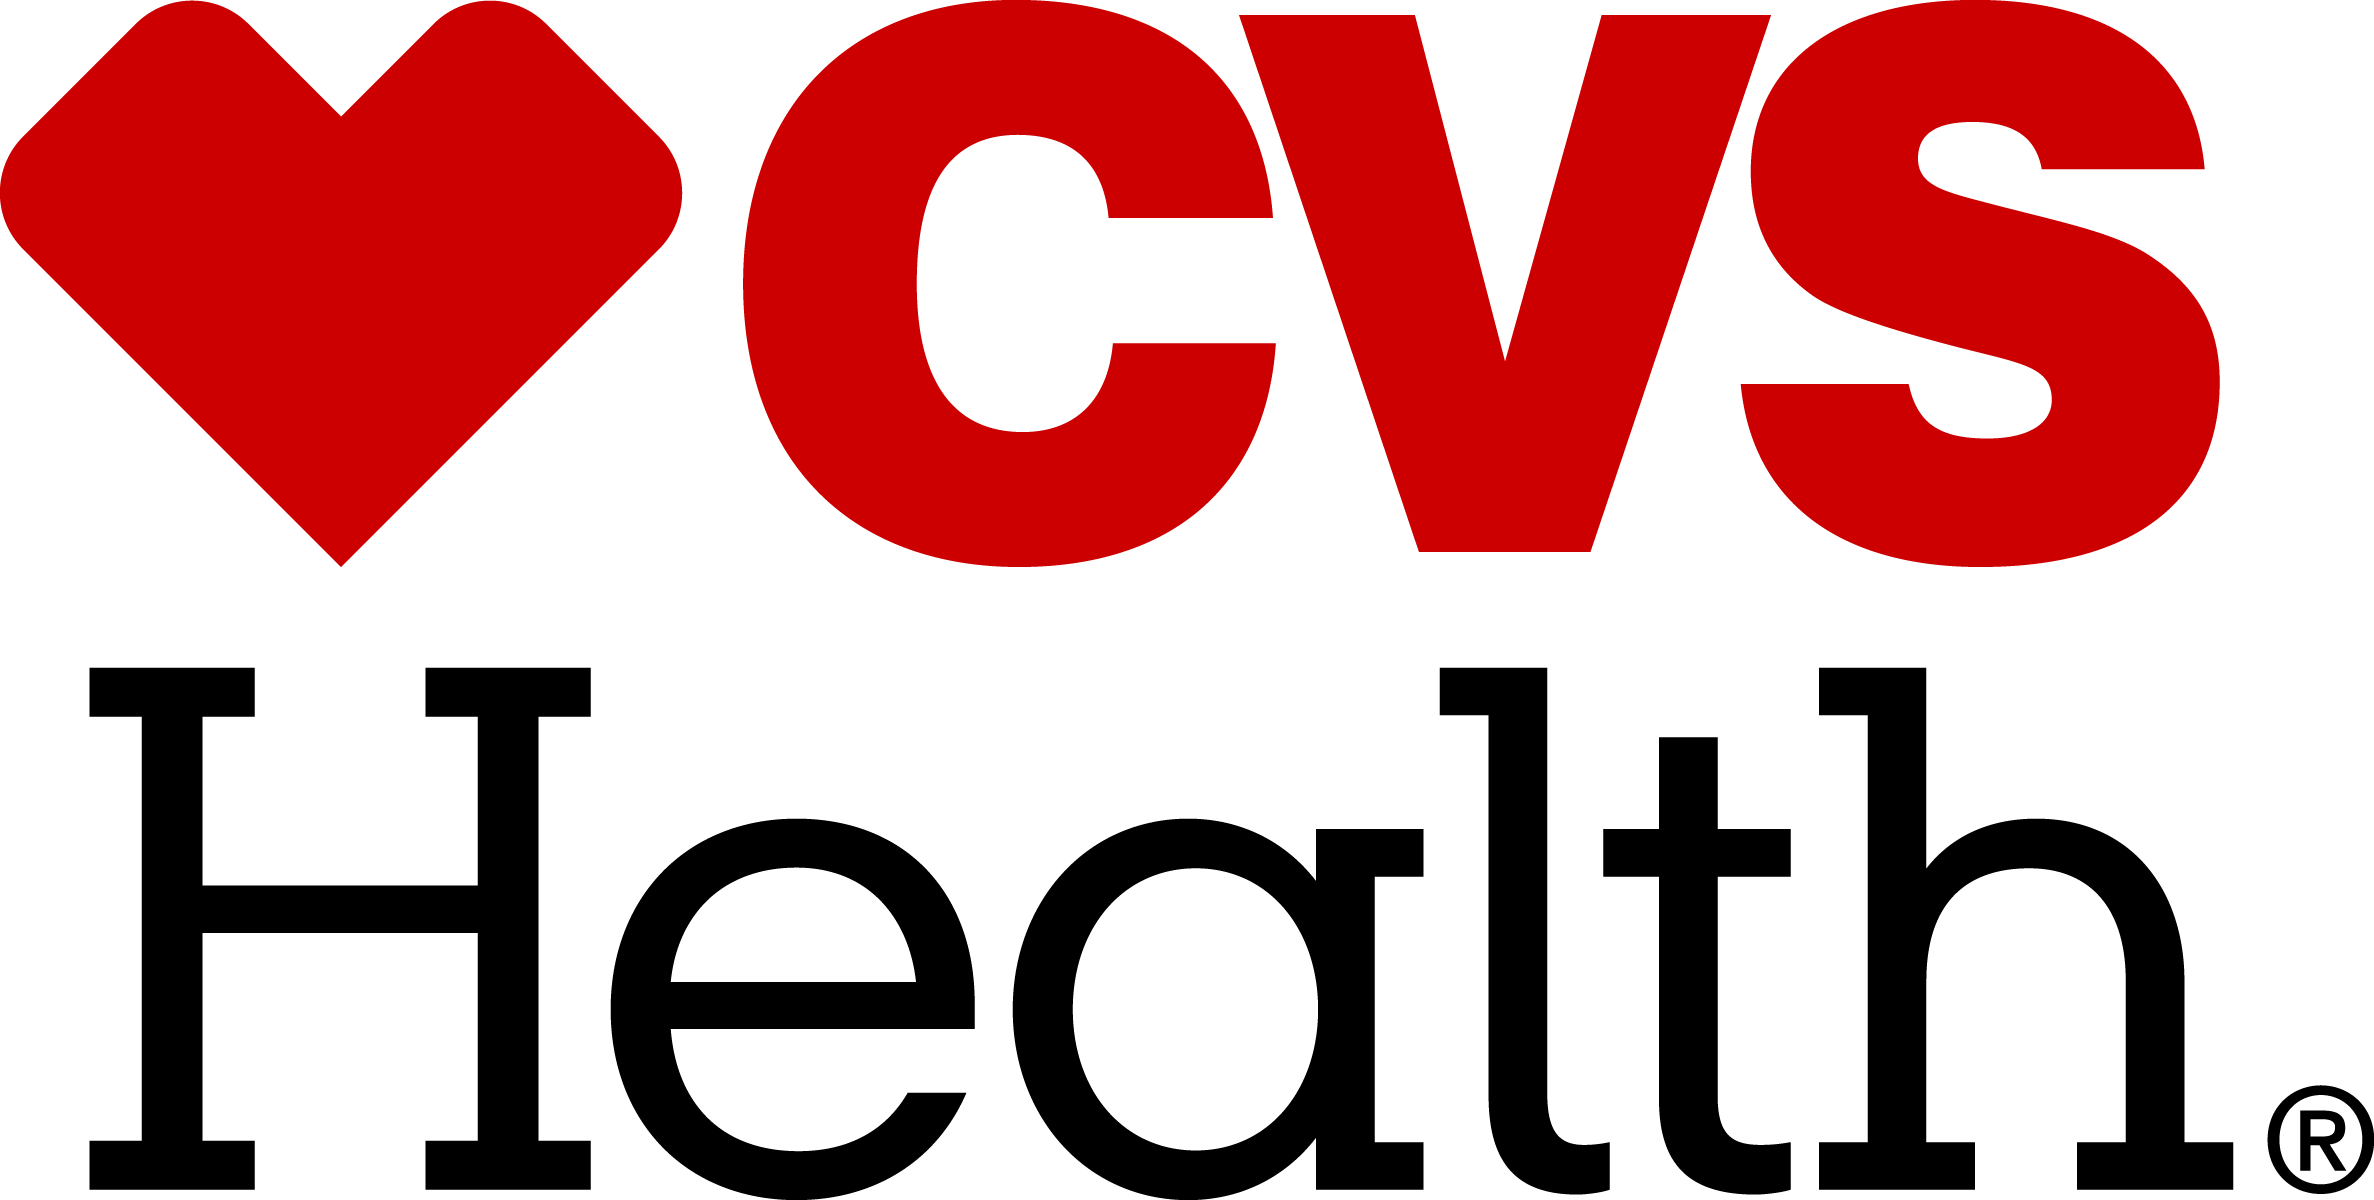 CVS’s Health Services Revenue Grew to $186.8 Billion